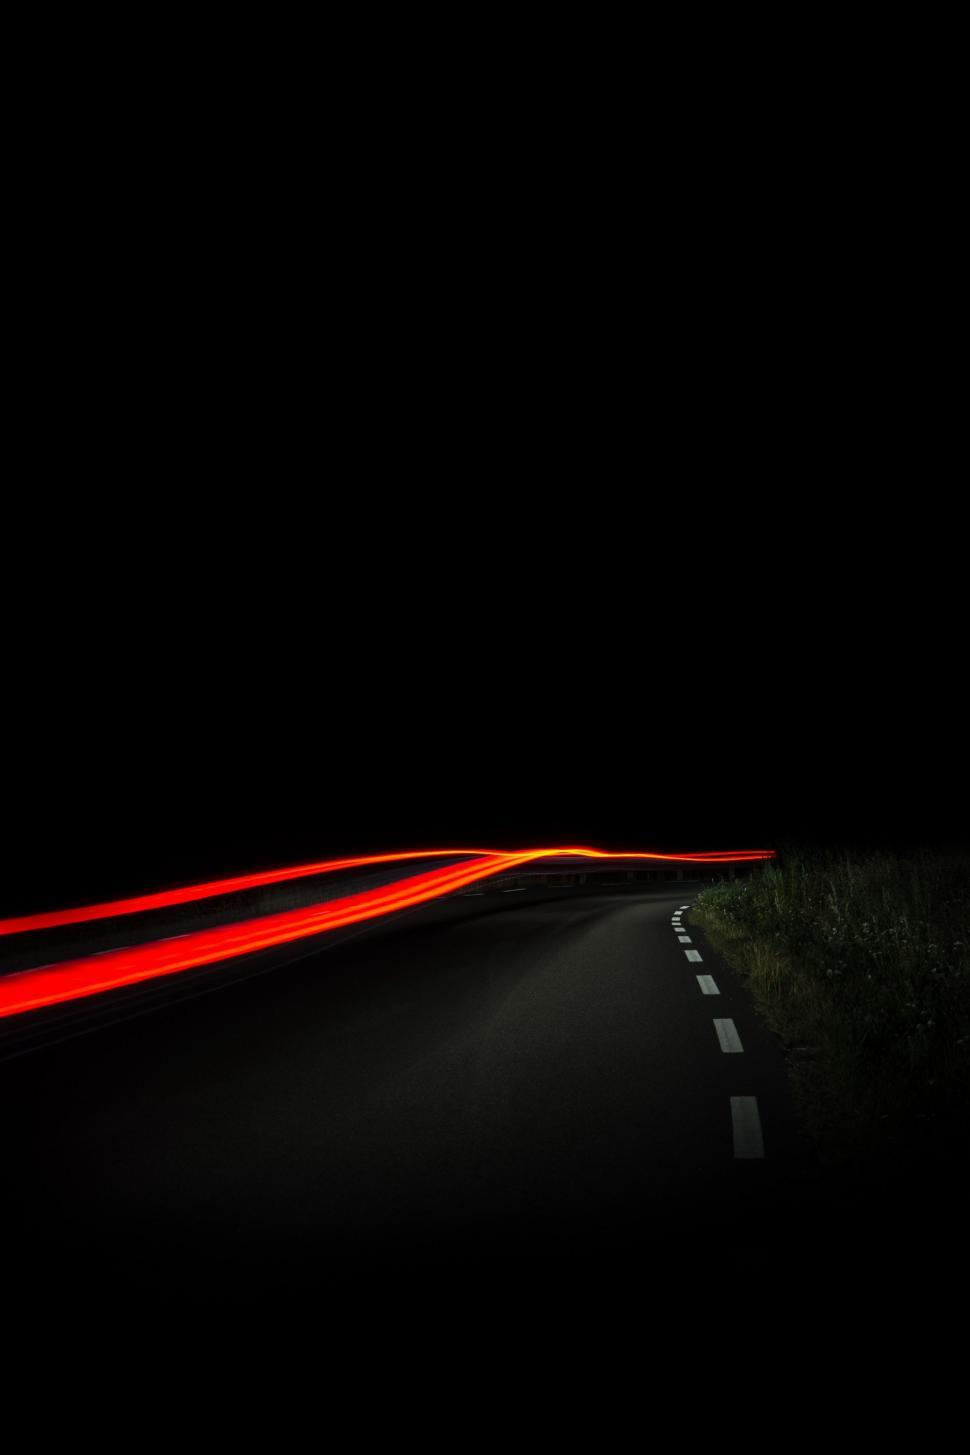 Free Image of Car Driving Down Dark Road at Night 